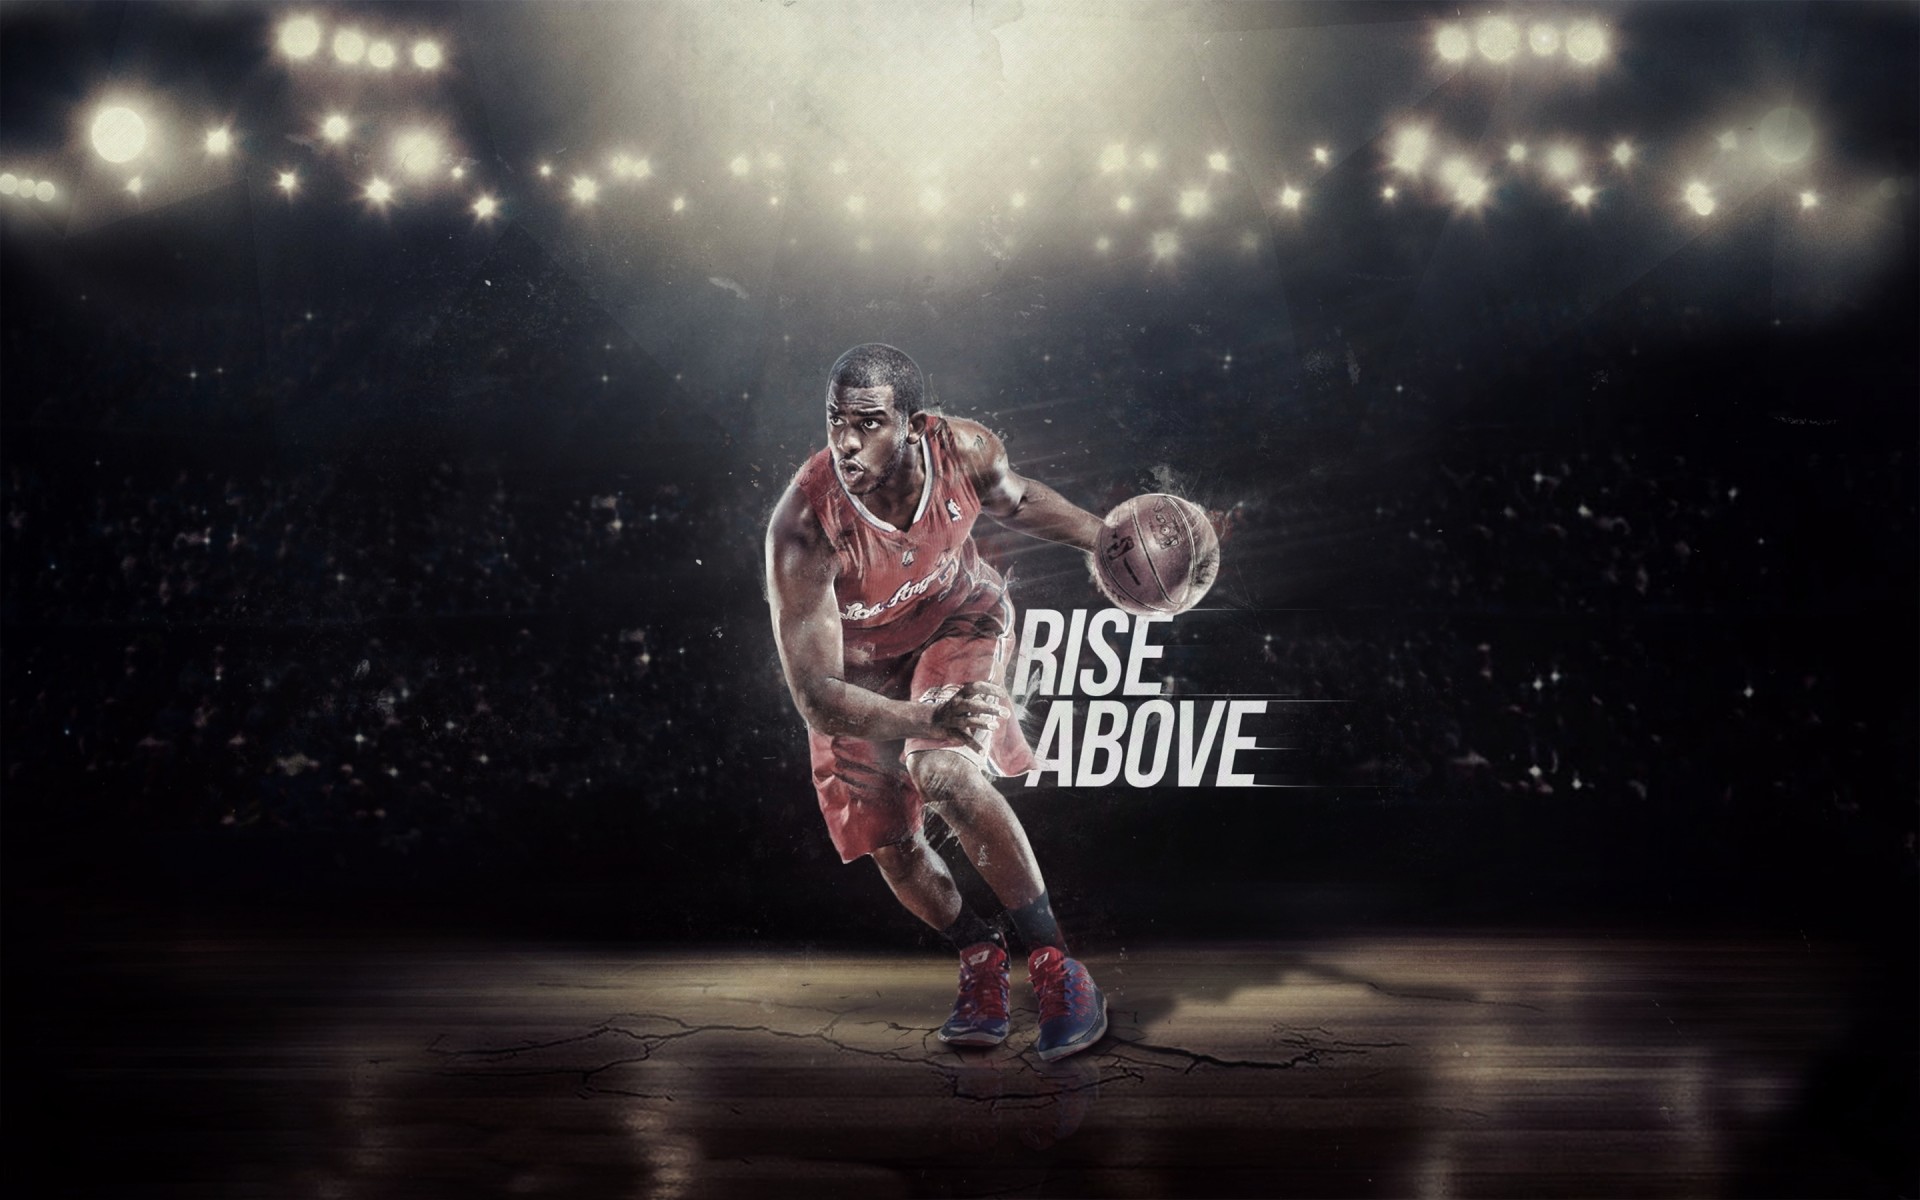 Paul Rise Player Nba Basketball Wallpaper